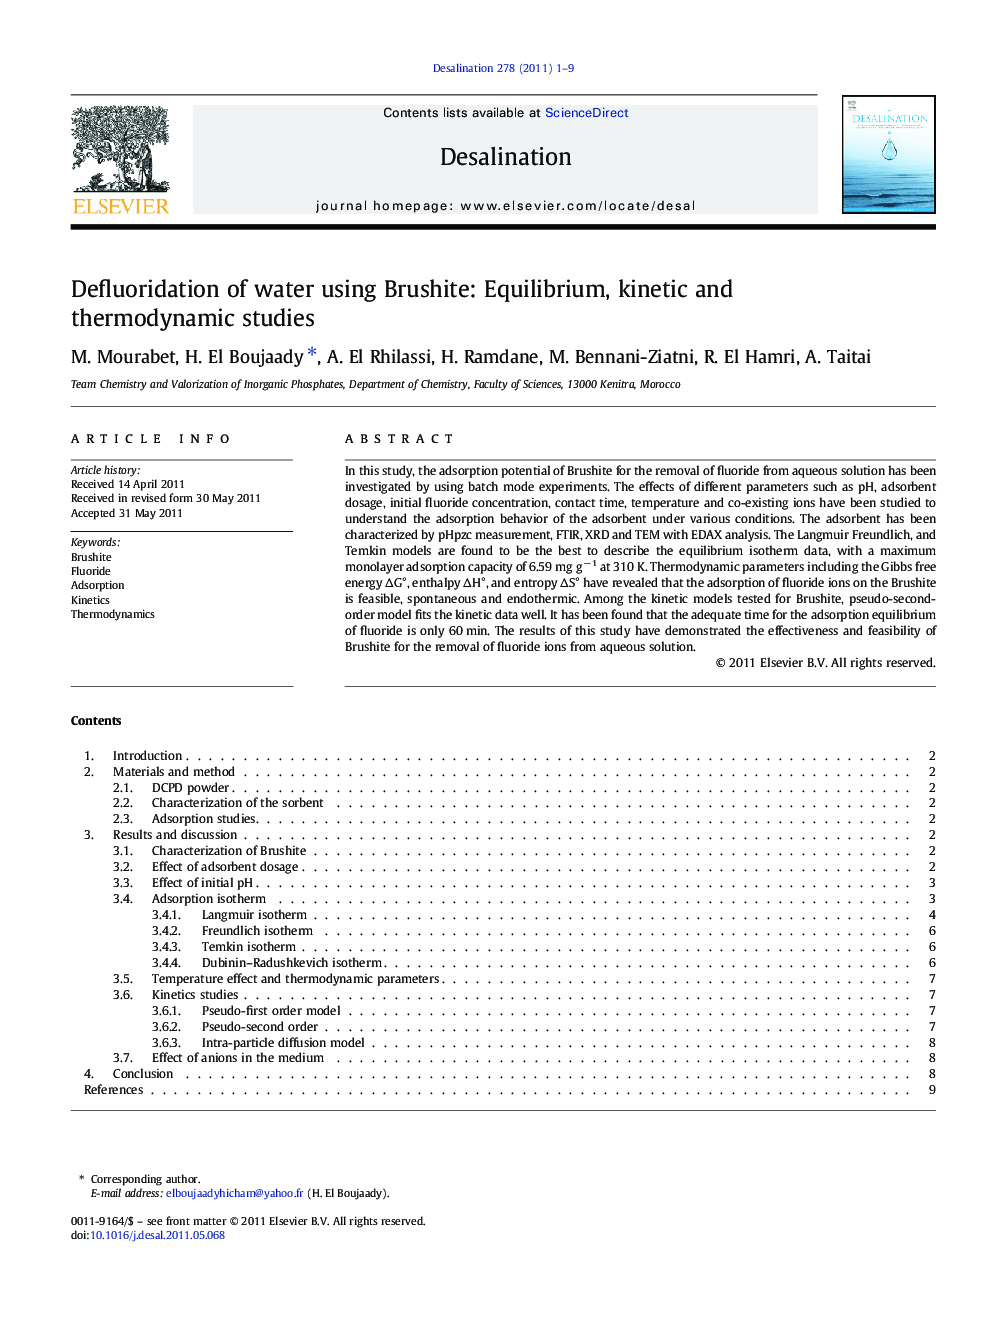 Defluoridation of water using Brushite: Equilibrium, kinetic and thermodynamic studies